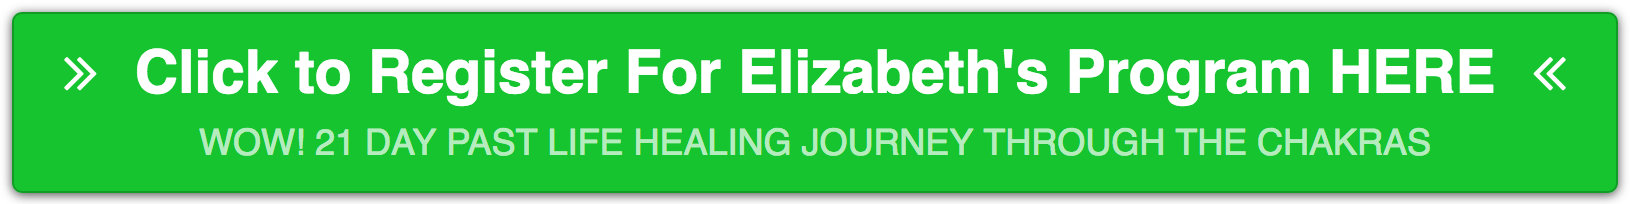 elizabeth button